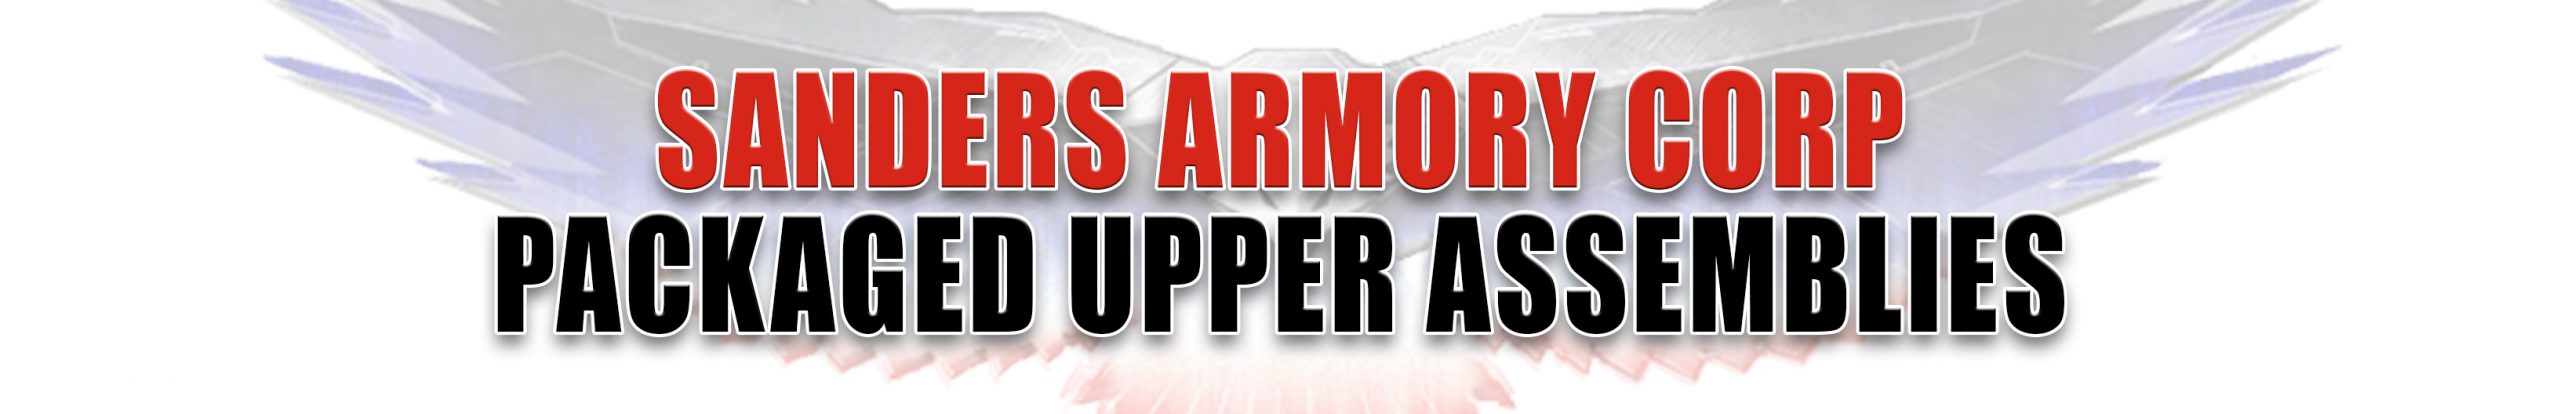 Sanders Armory Corp Upper Assemblies